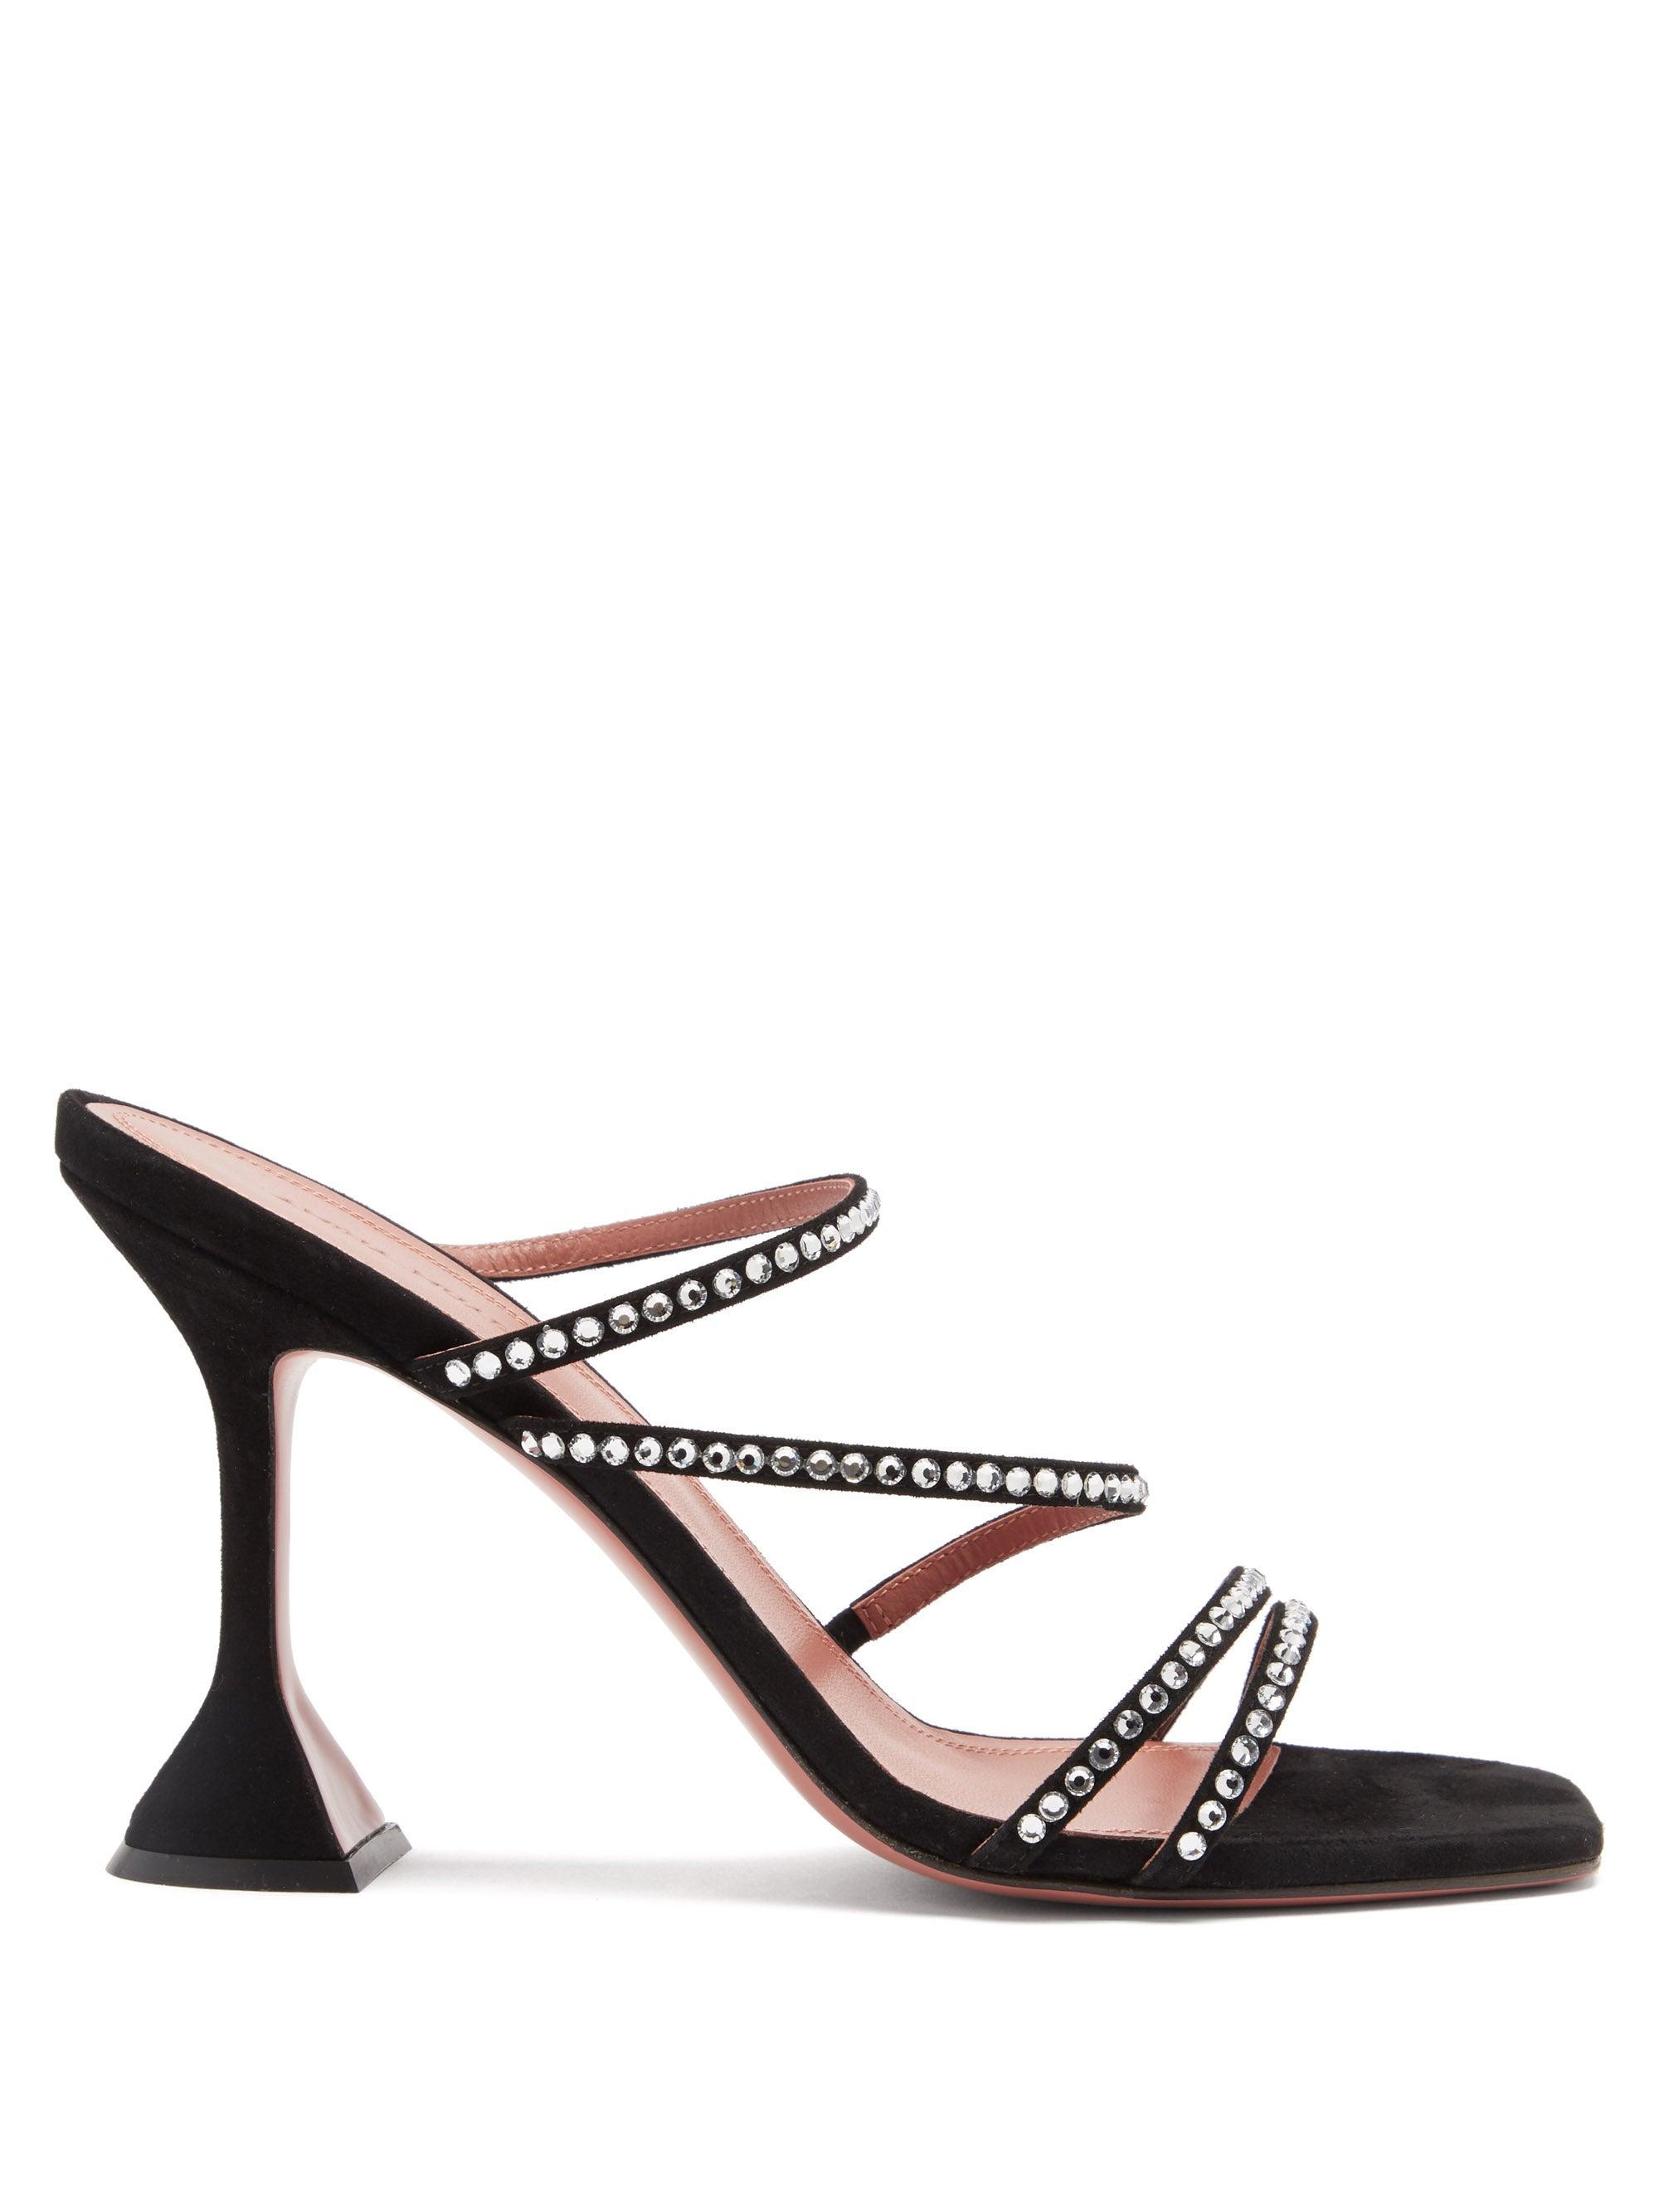 AMINA MUADDI Naima Crystal-embellished Suede Sandals in Black - Lyst